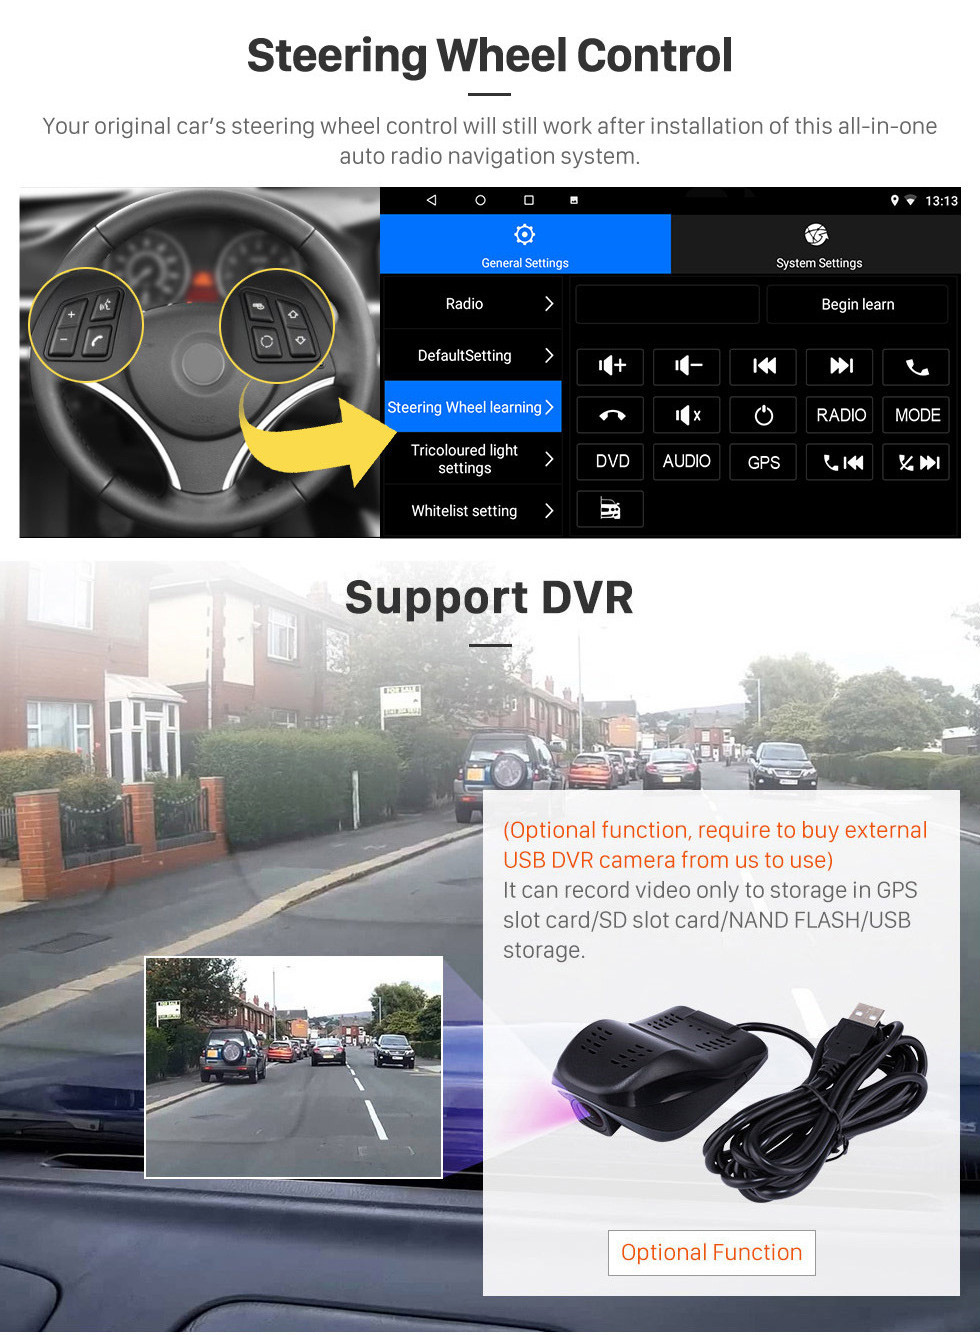 Seicane 2012-2019 Chevy Chevrolet Onix Android 10.0 HD с сенсорным экраном 9 дюймов AUX Bluetooth WIFI USB GPS навигация Поддержка радио SWC Carplay